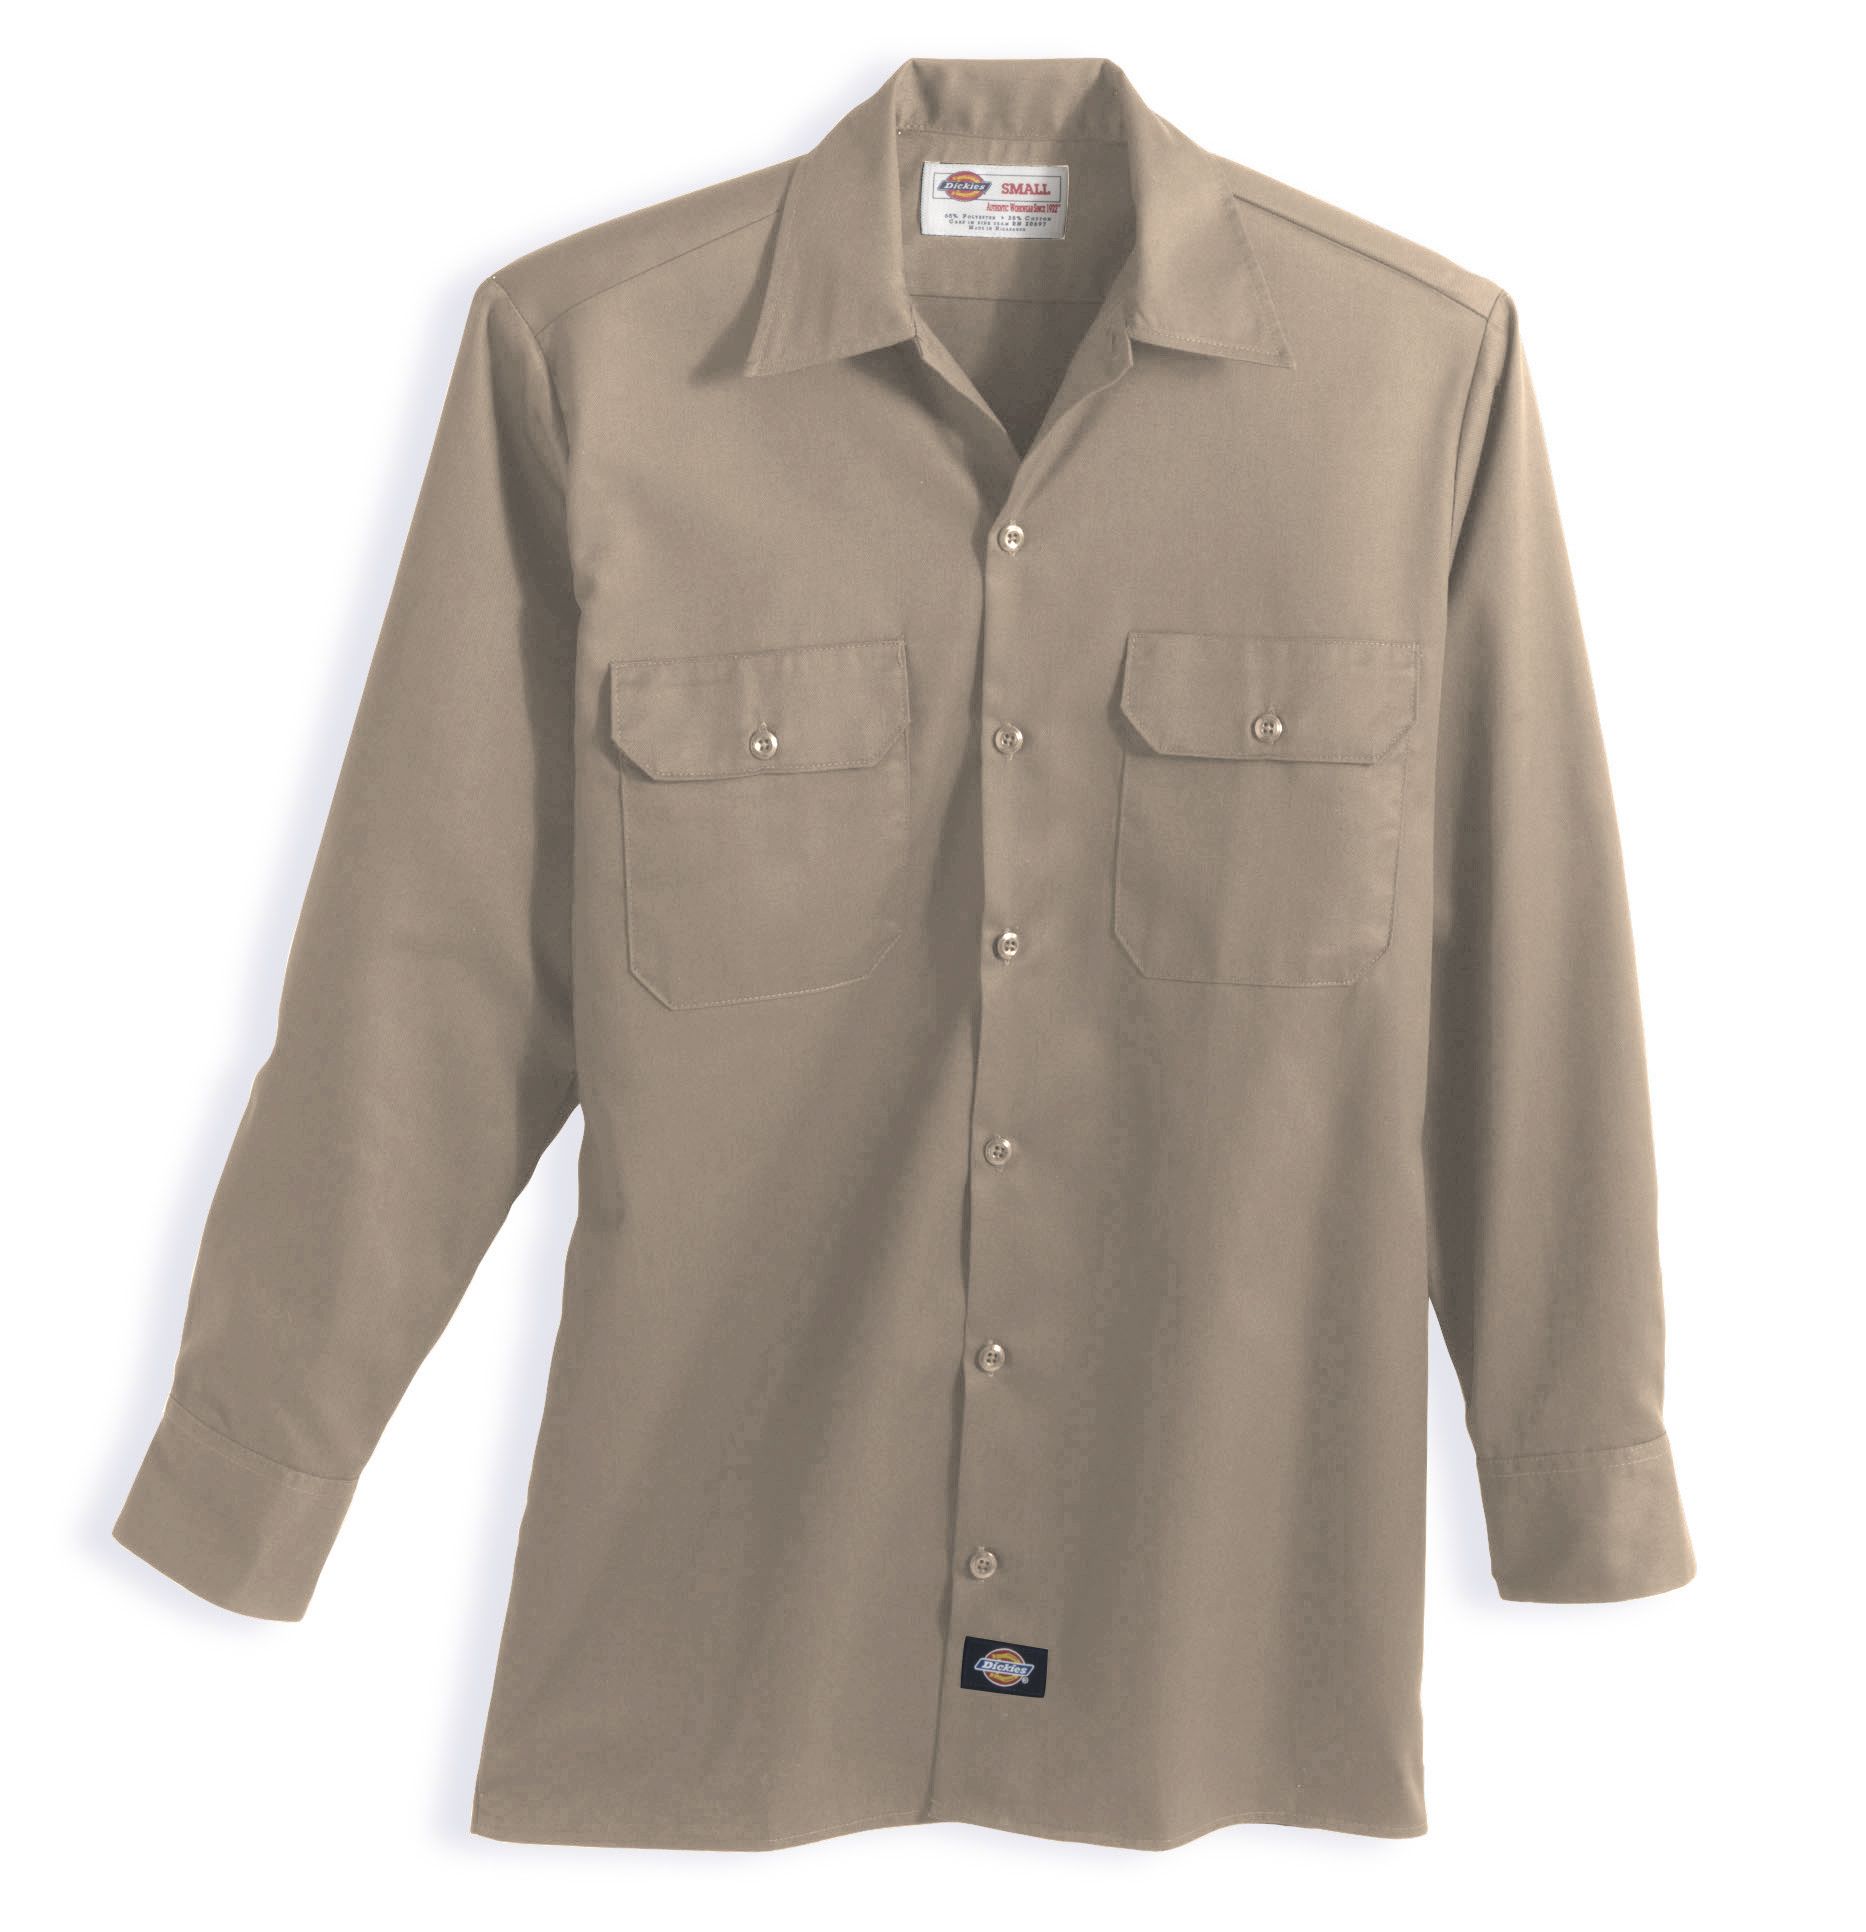 Dickies Men's Traditional Long Sleeve Work Shirt